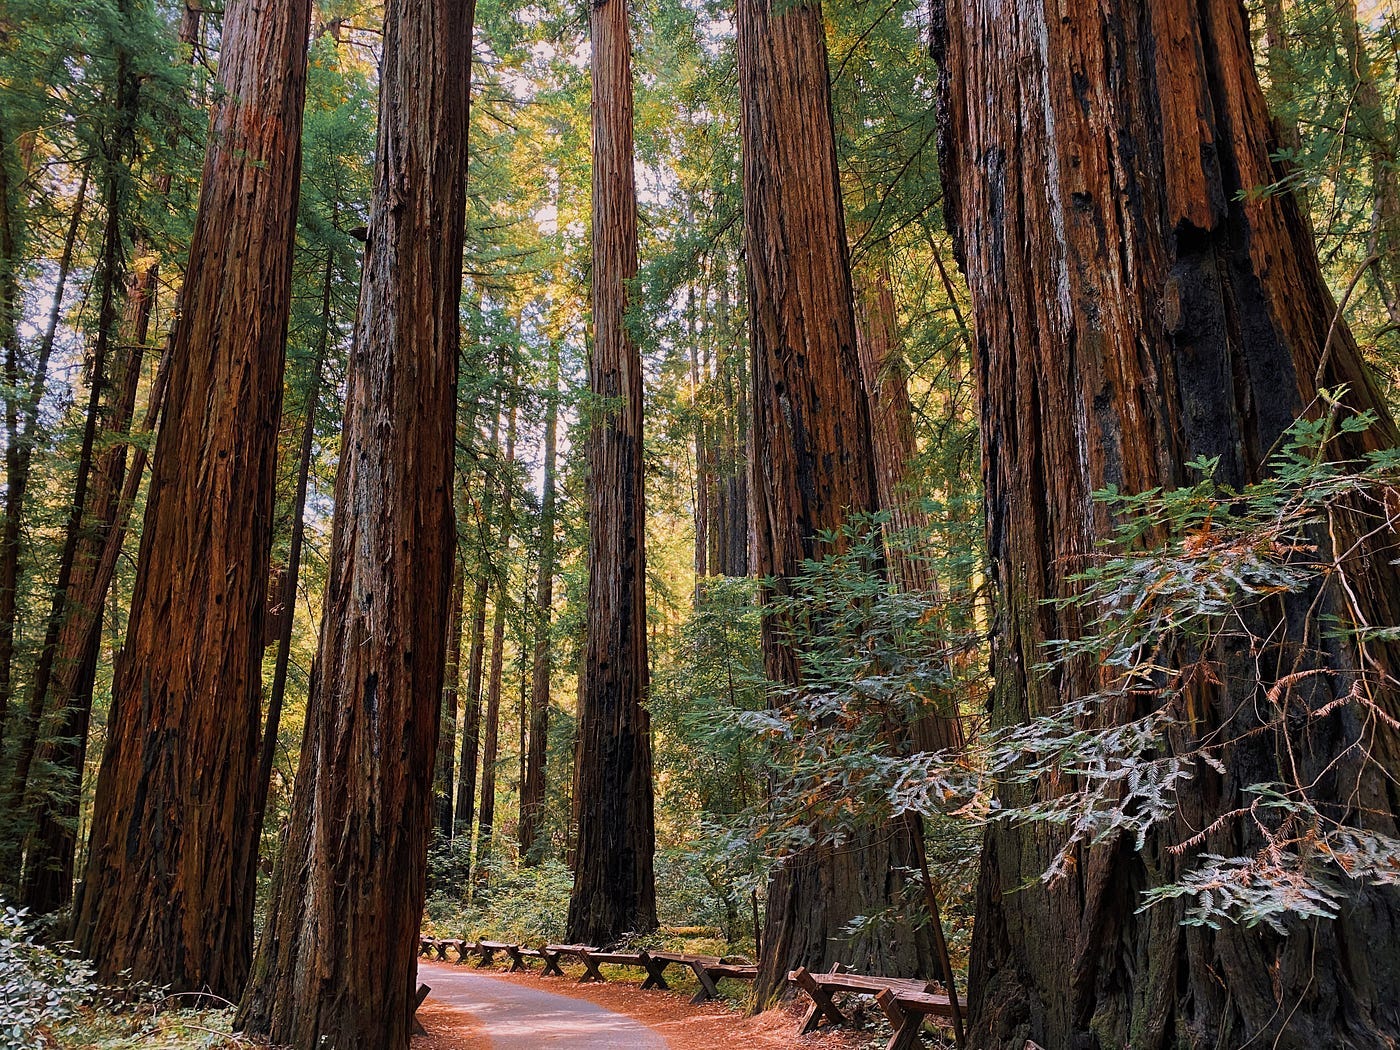 A path among redwood trees.